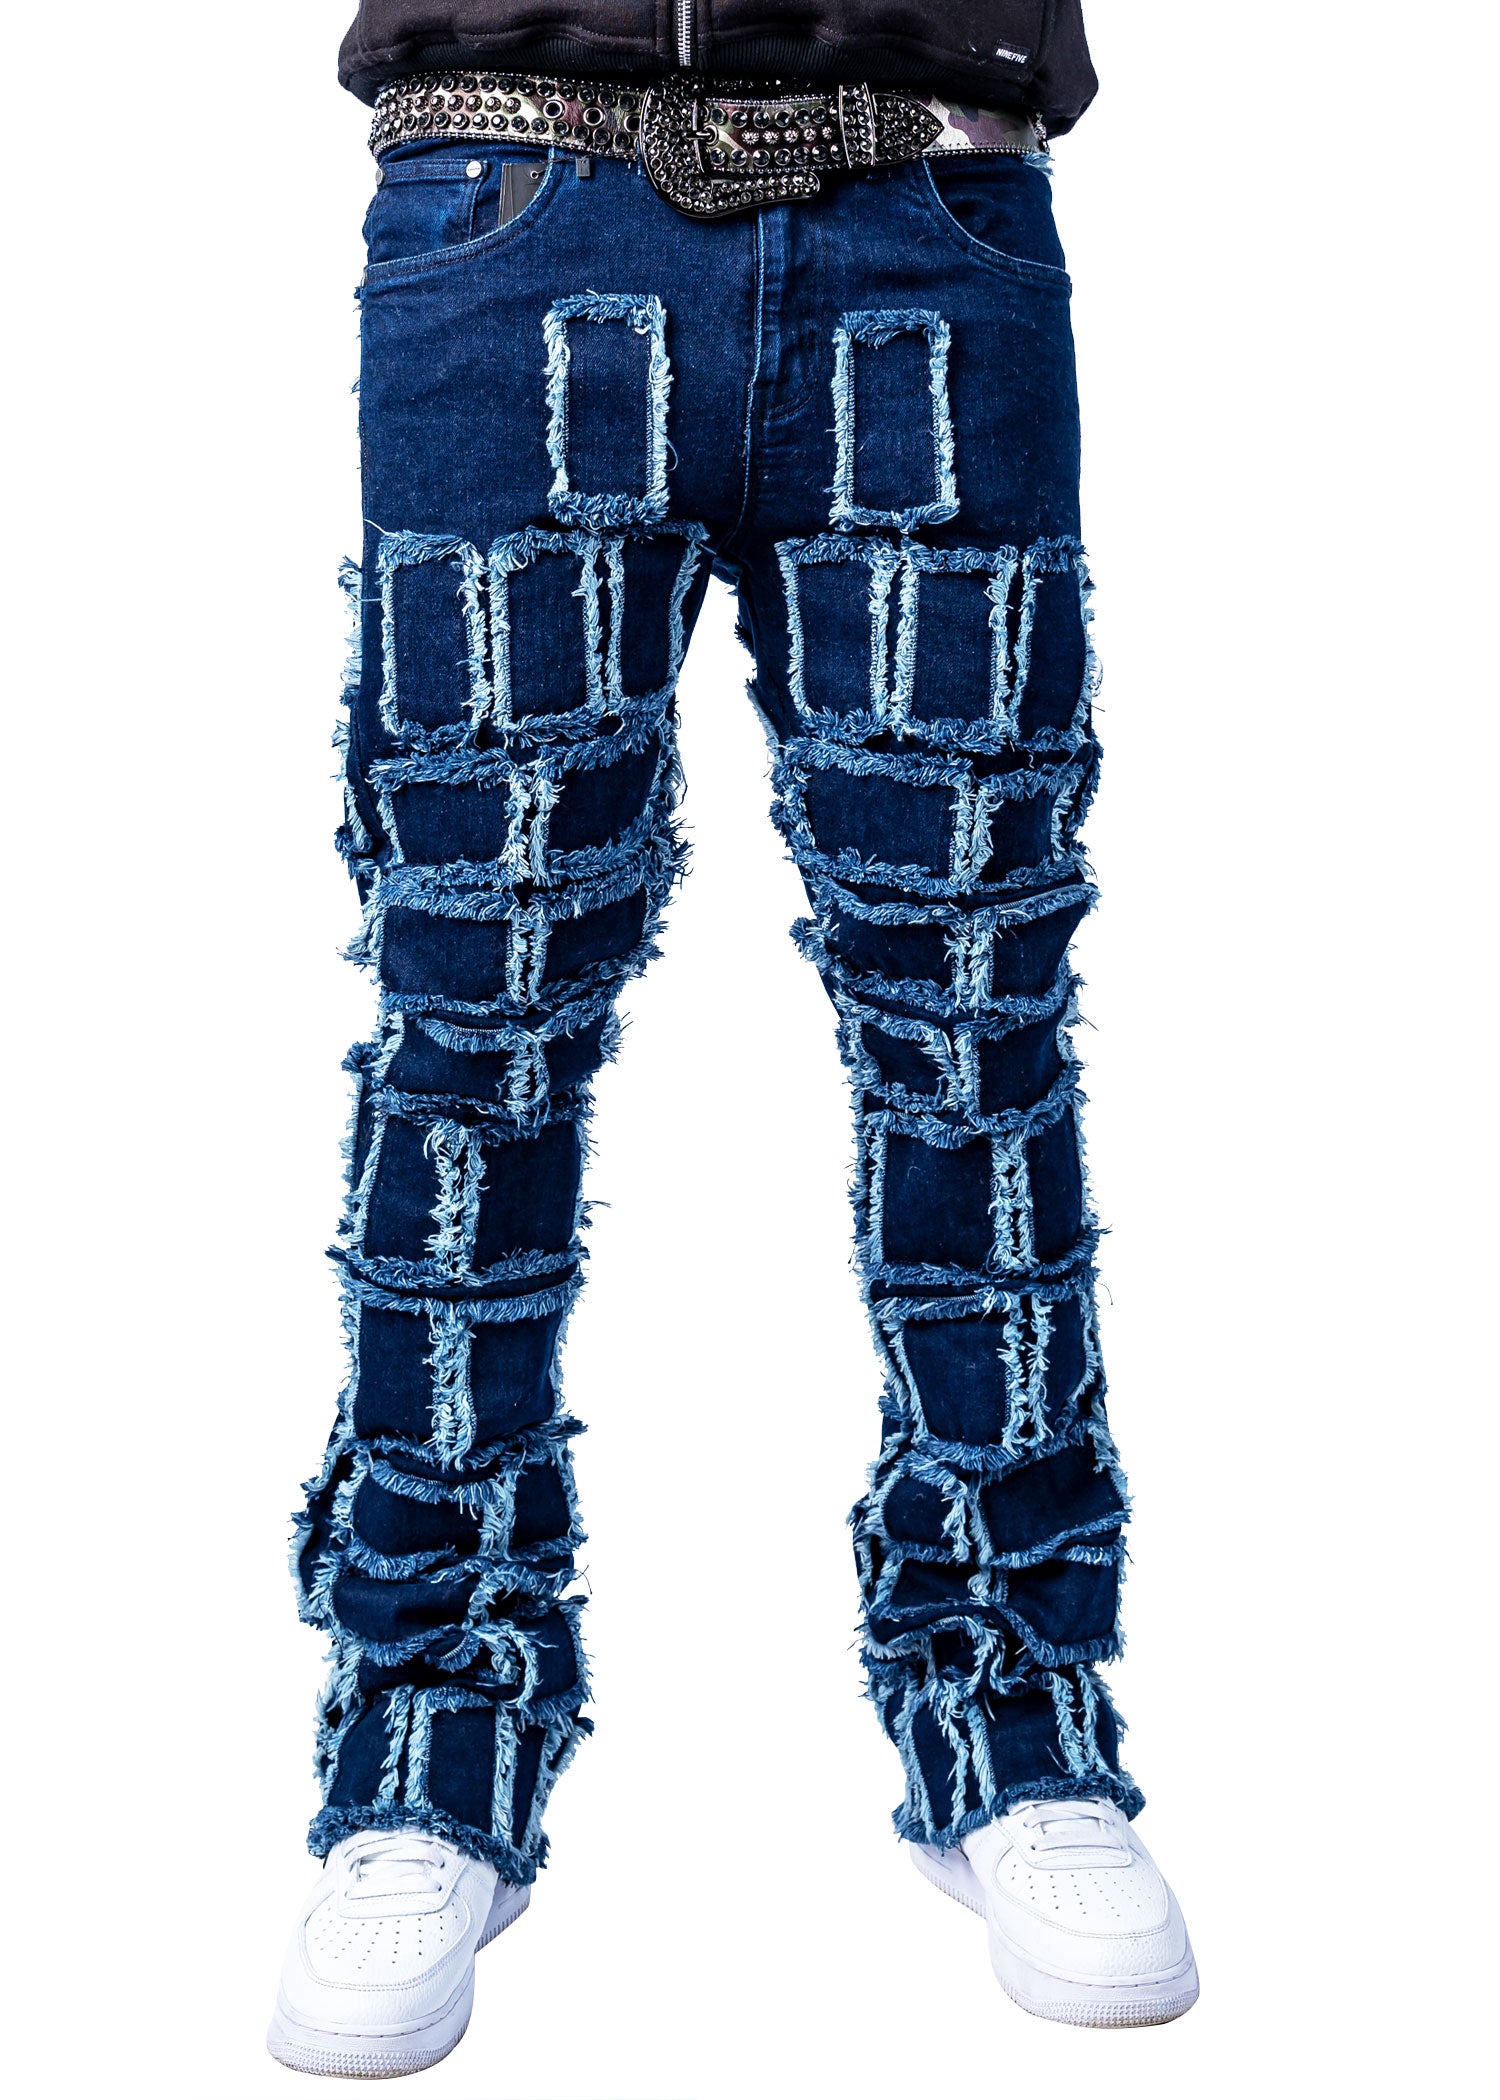 Nala Mens Stacked Denim Jeans - 95denim